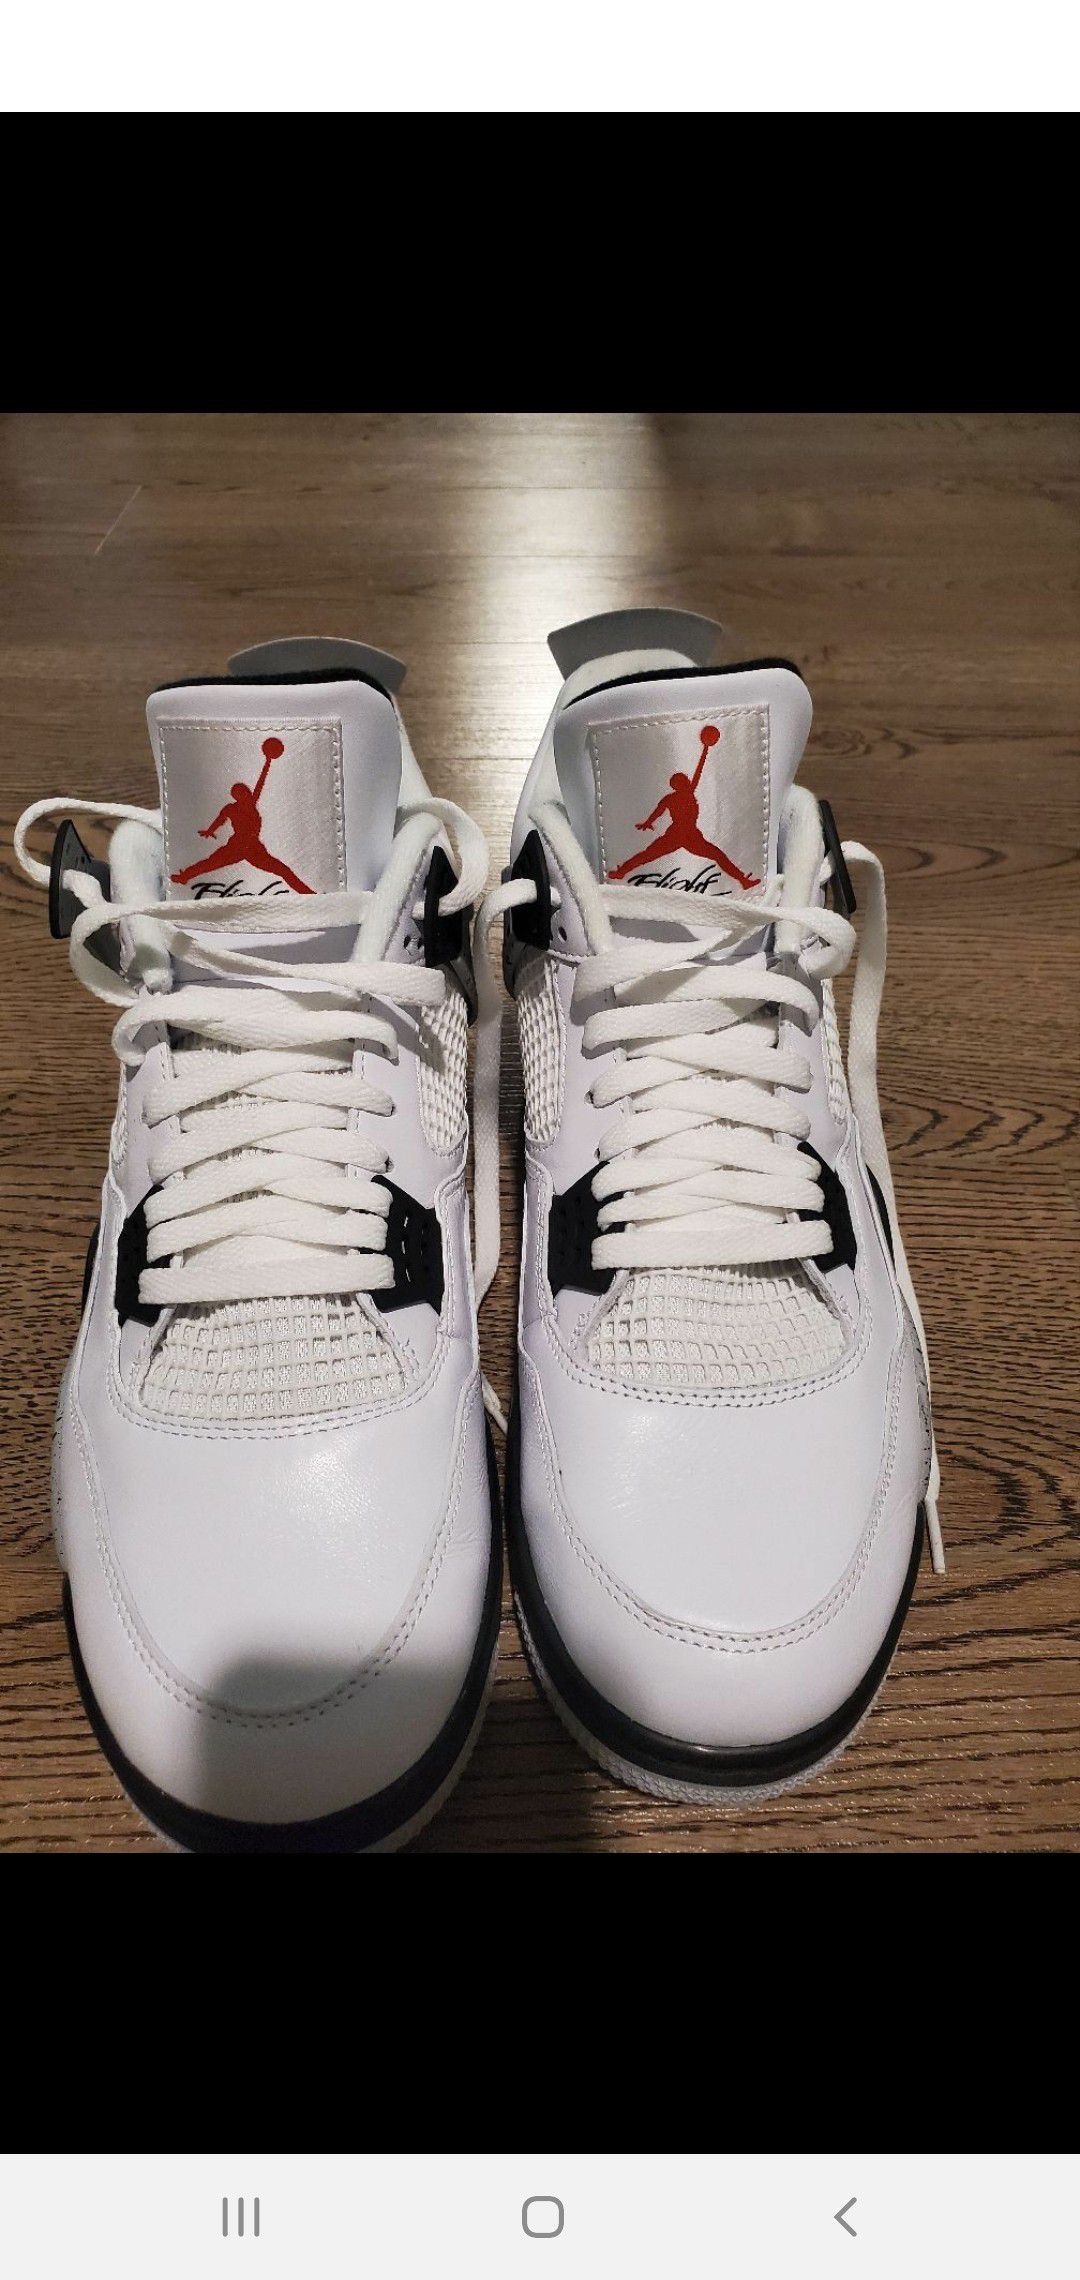 Air Jordan Retro 4 'White Cement' Size 13